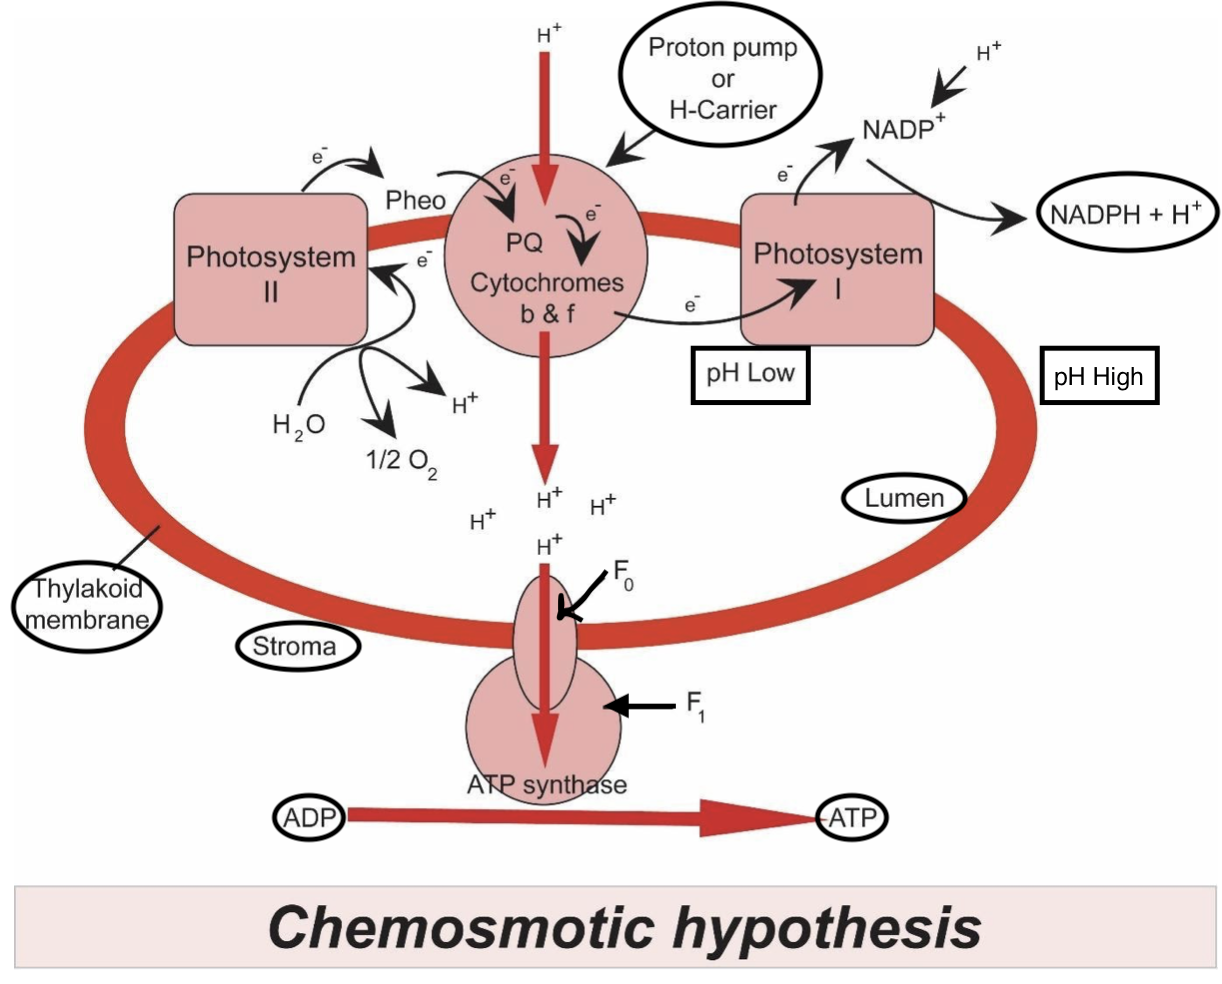 chemiosmotic hypothesis pdf